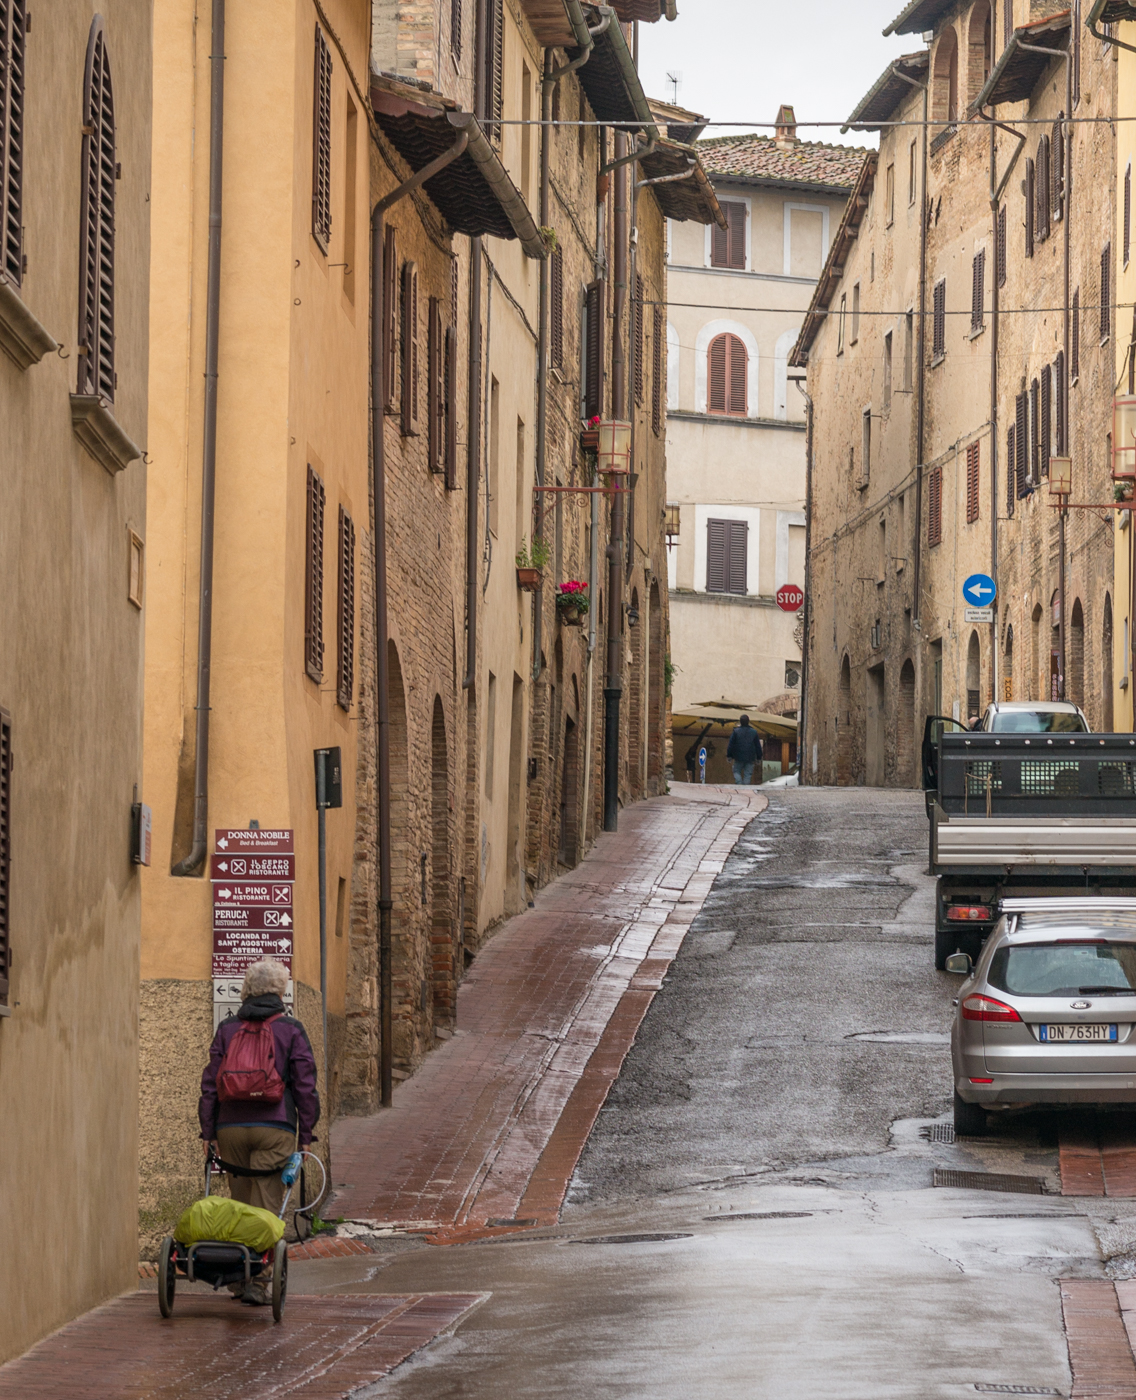 A lone pilgrim on the Via Francigena walks through San Gimignano, Italy, on a rainy day | Photo by Mike Hudak